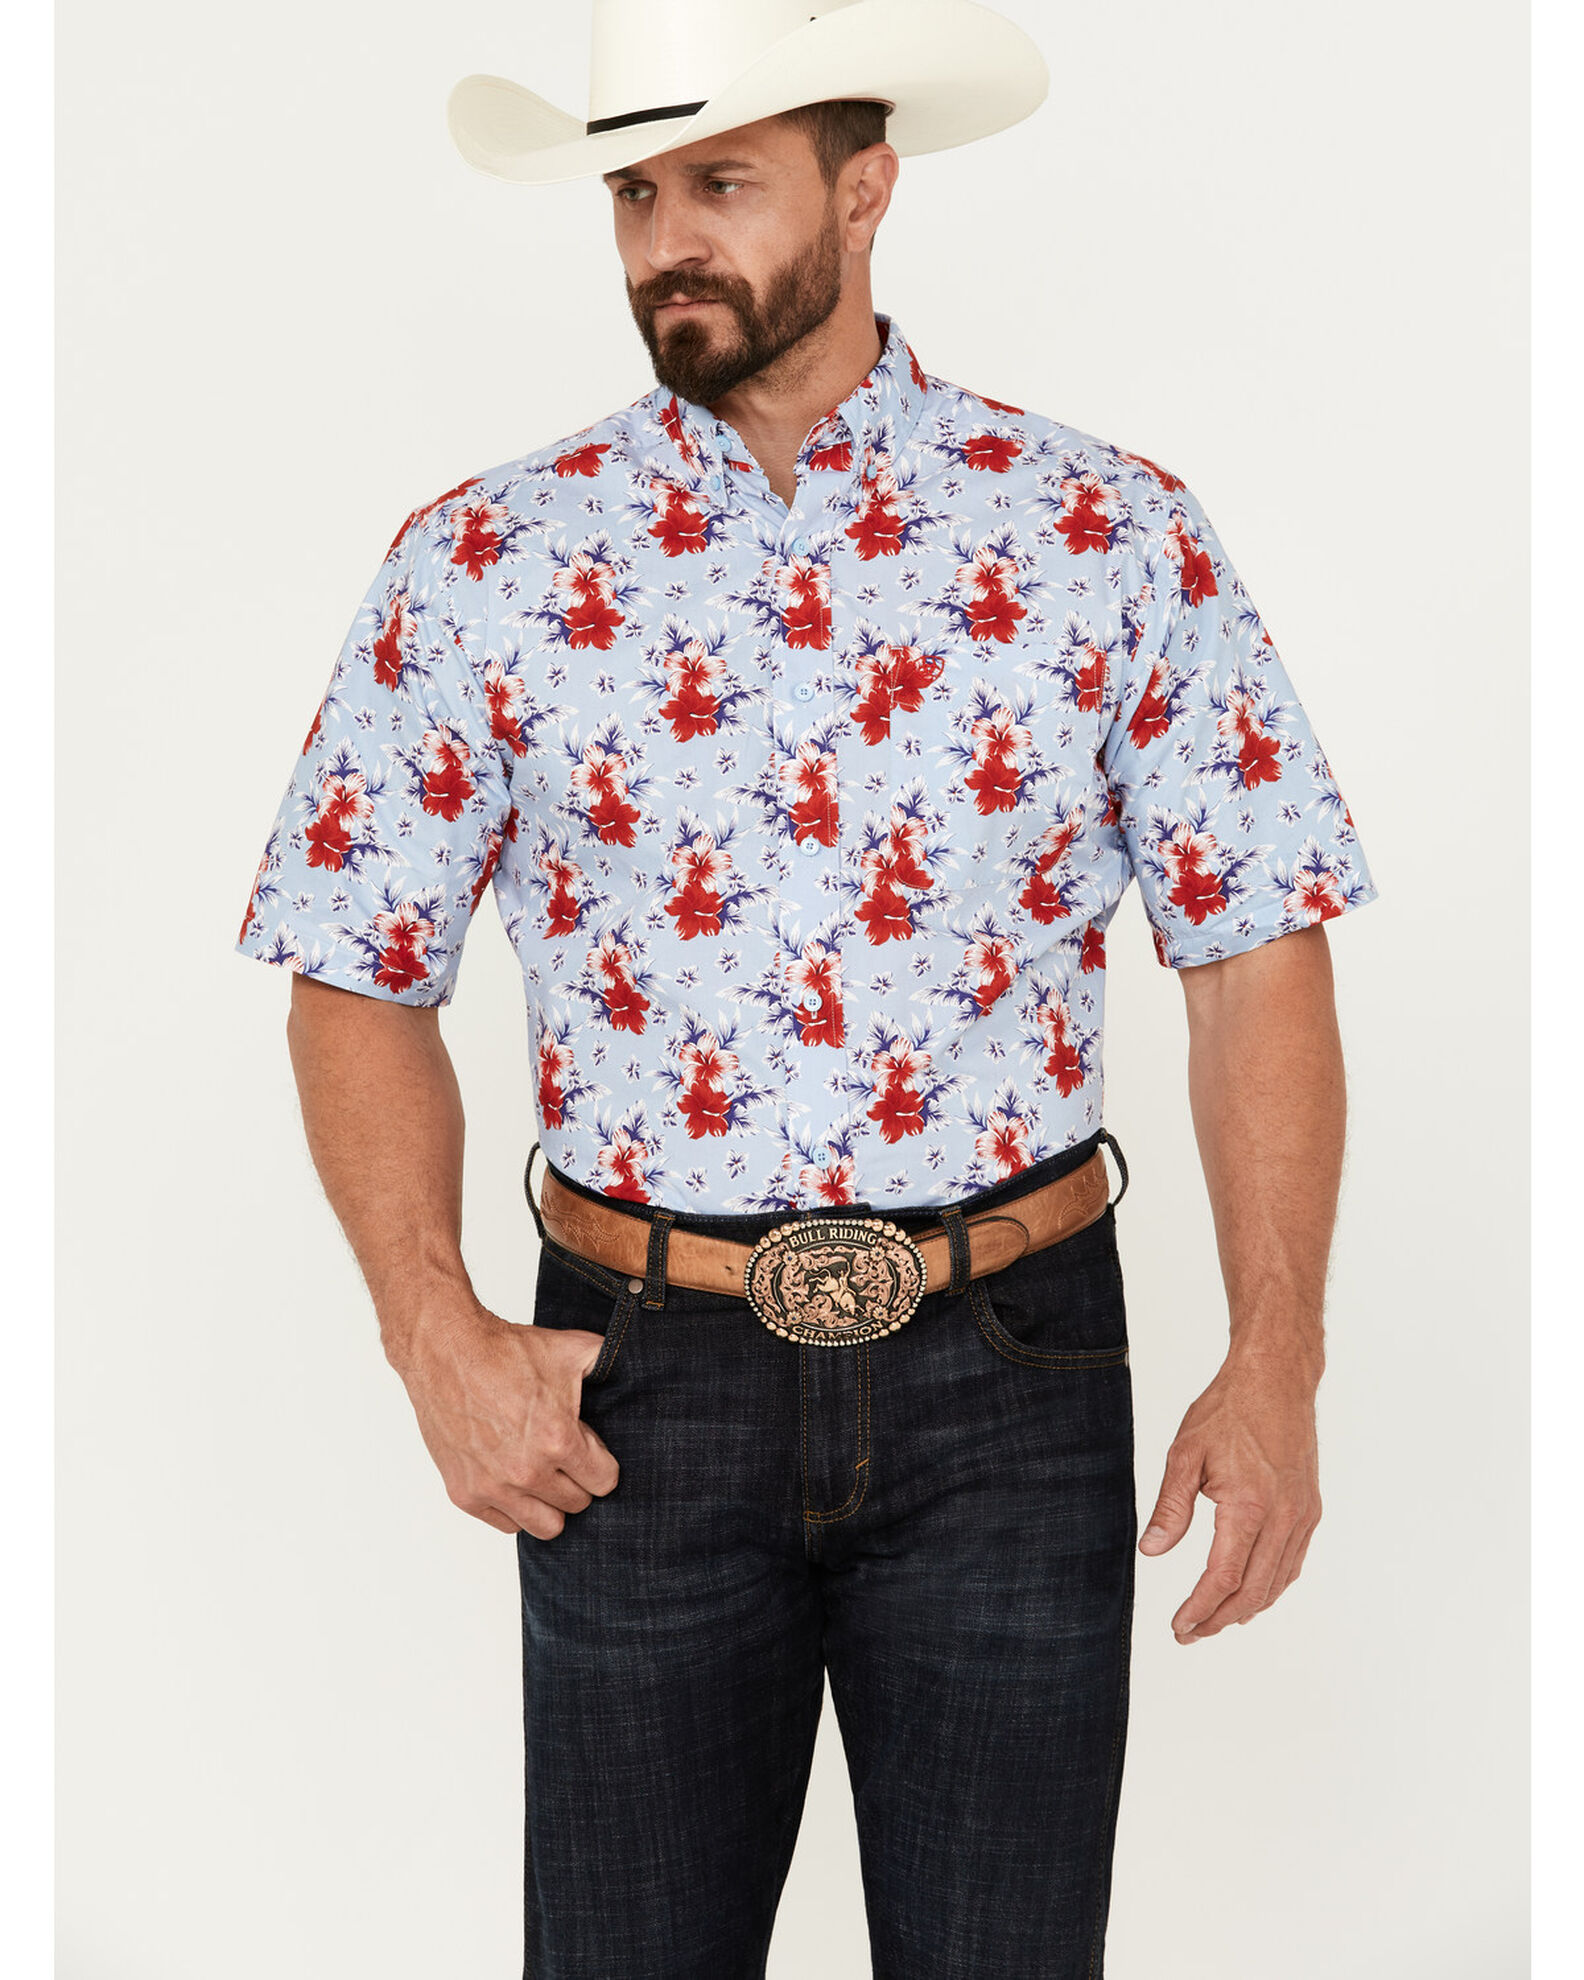 Ariat Men's Jeremiah Floral Print Button-Down Short Sleeve Western Shirt